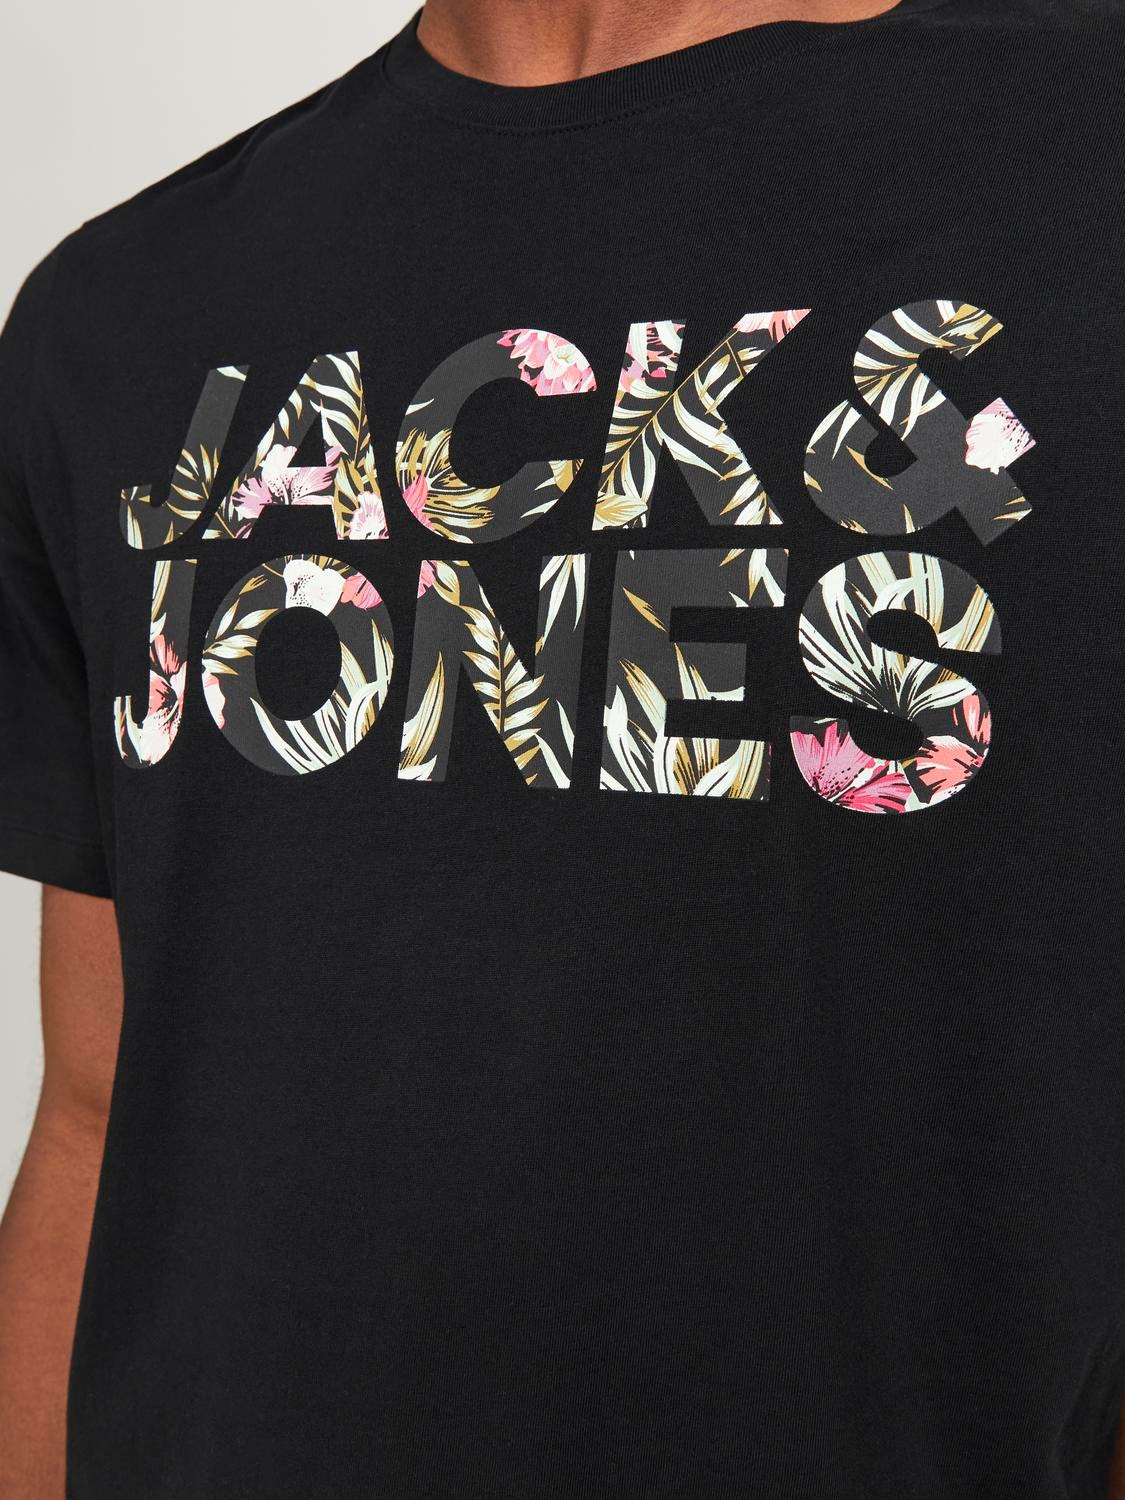 Jack & Jones Logo Pyöreä pääntie T-paita -Carbon - 12250683